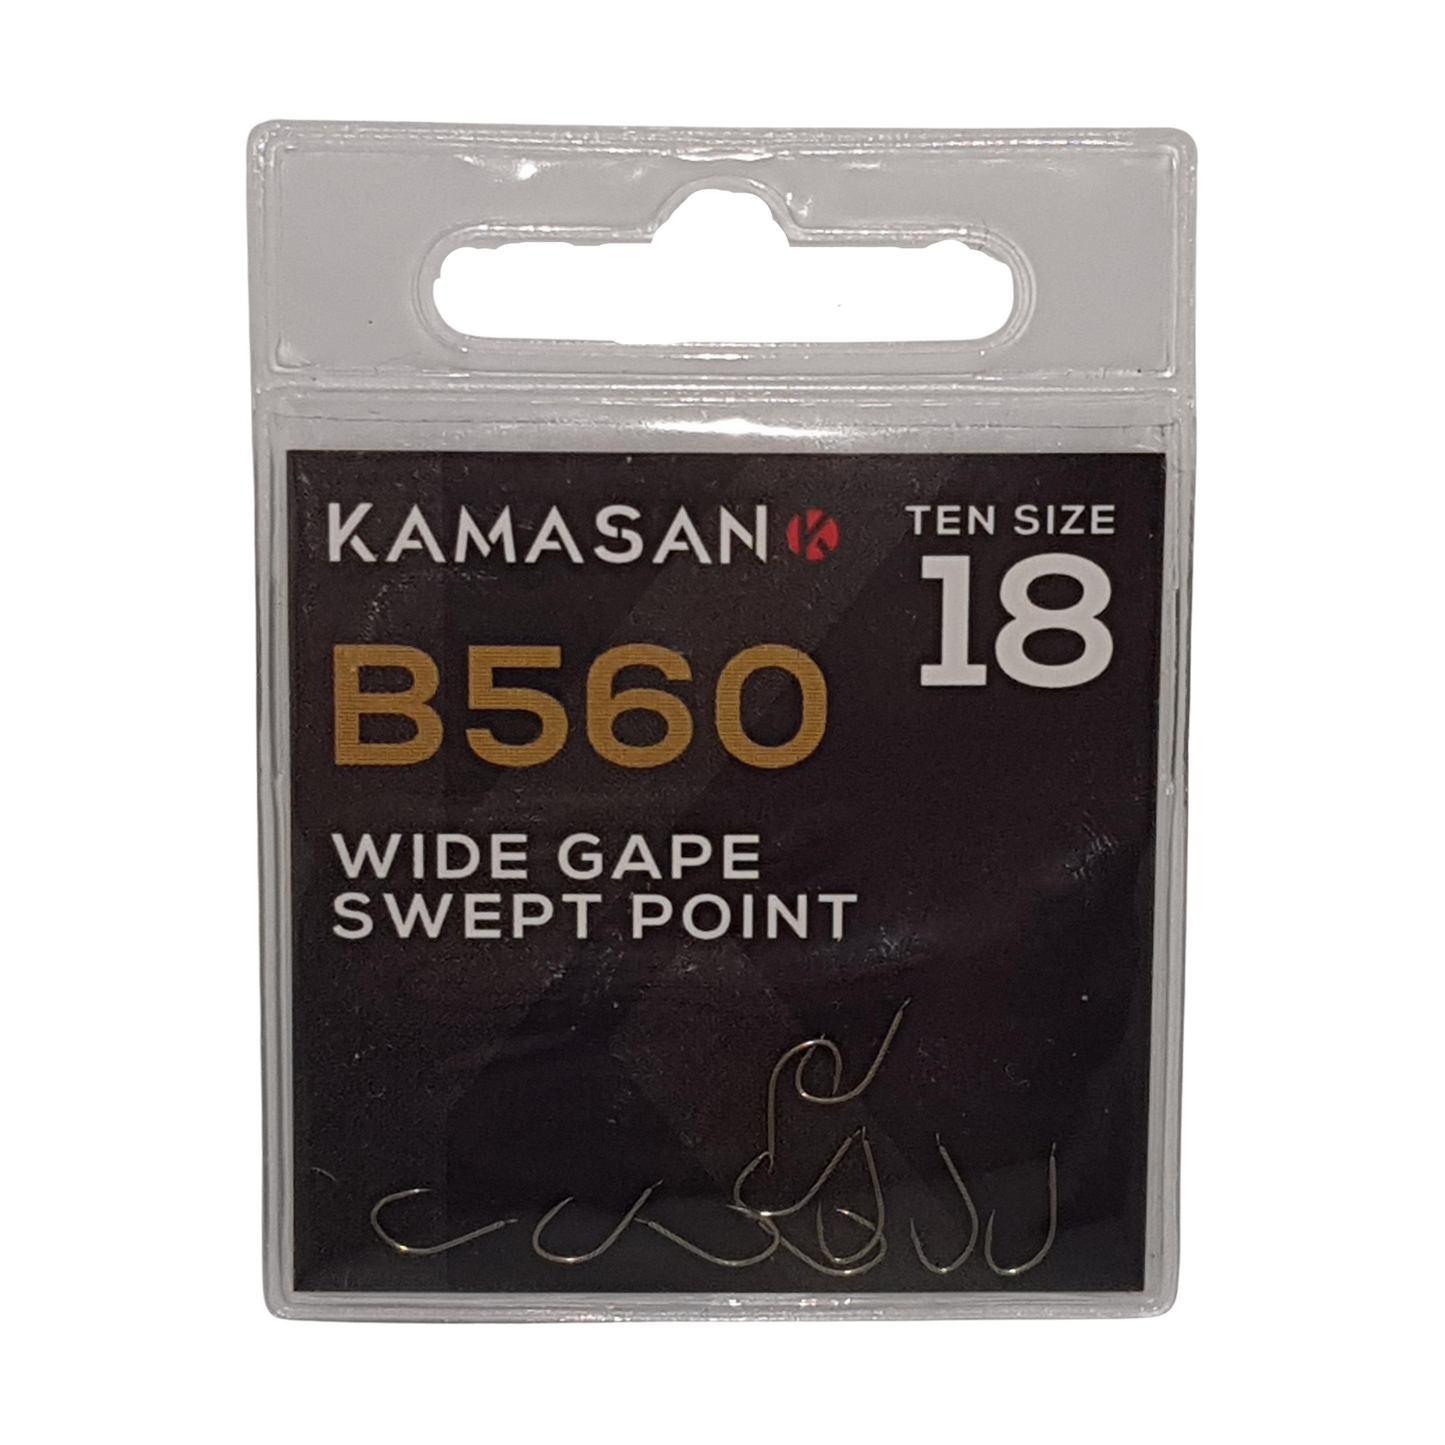 Kamasan B560 Hooks - Size 18 - Micro Barbed - Natural Venue Popular Pattern